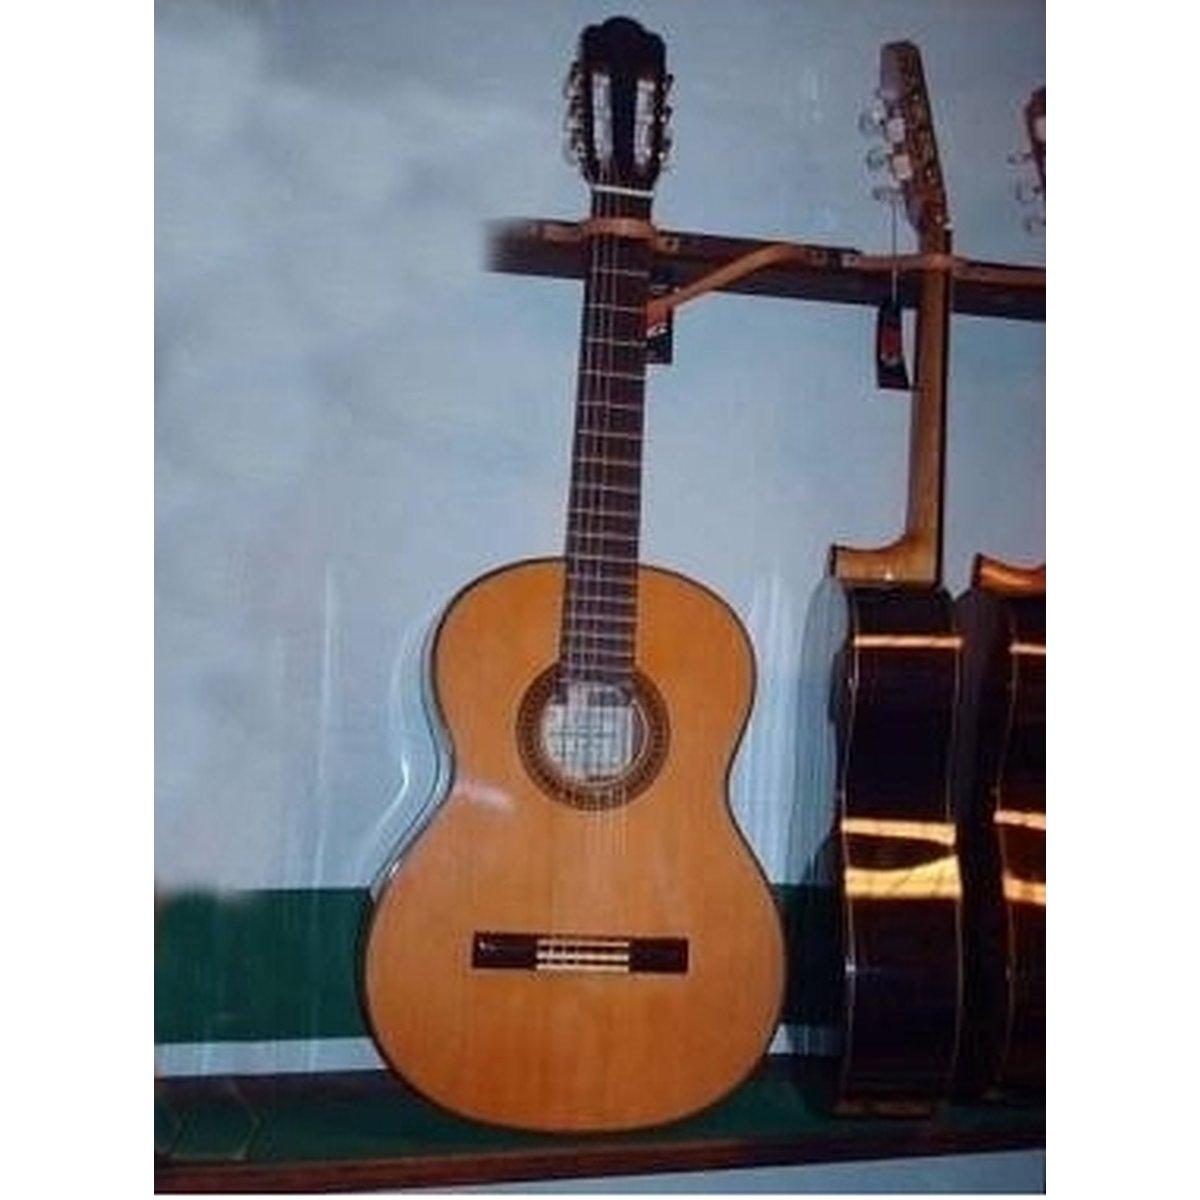 Barrios gran concert cedro chitarra classica